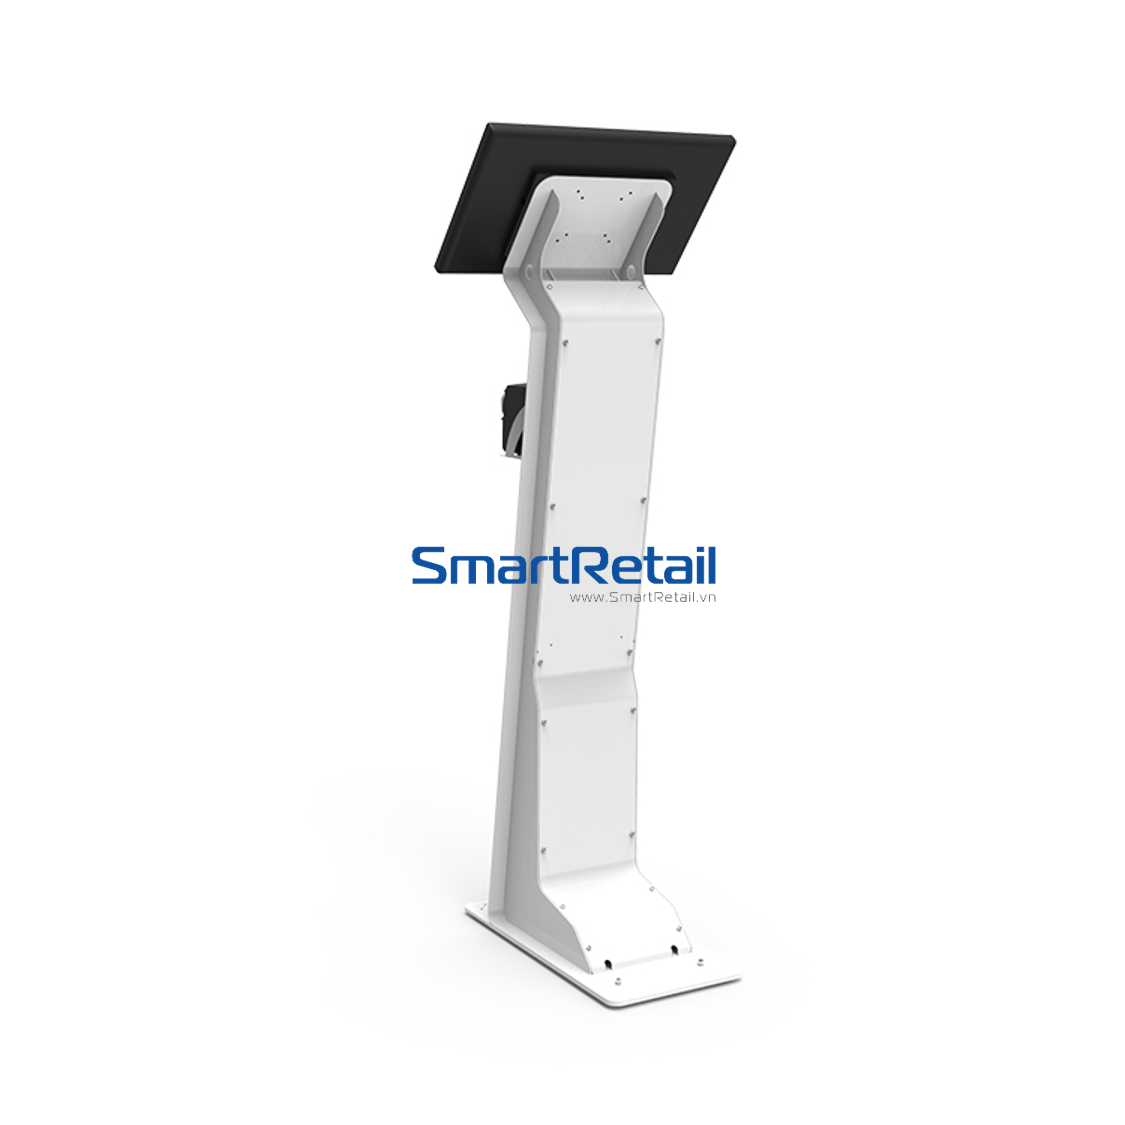 SmartRetail Kiosk Order SF 202 4